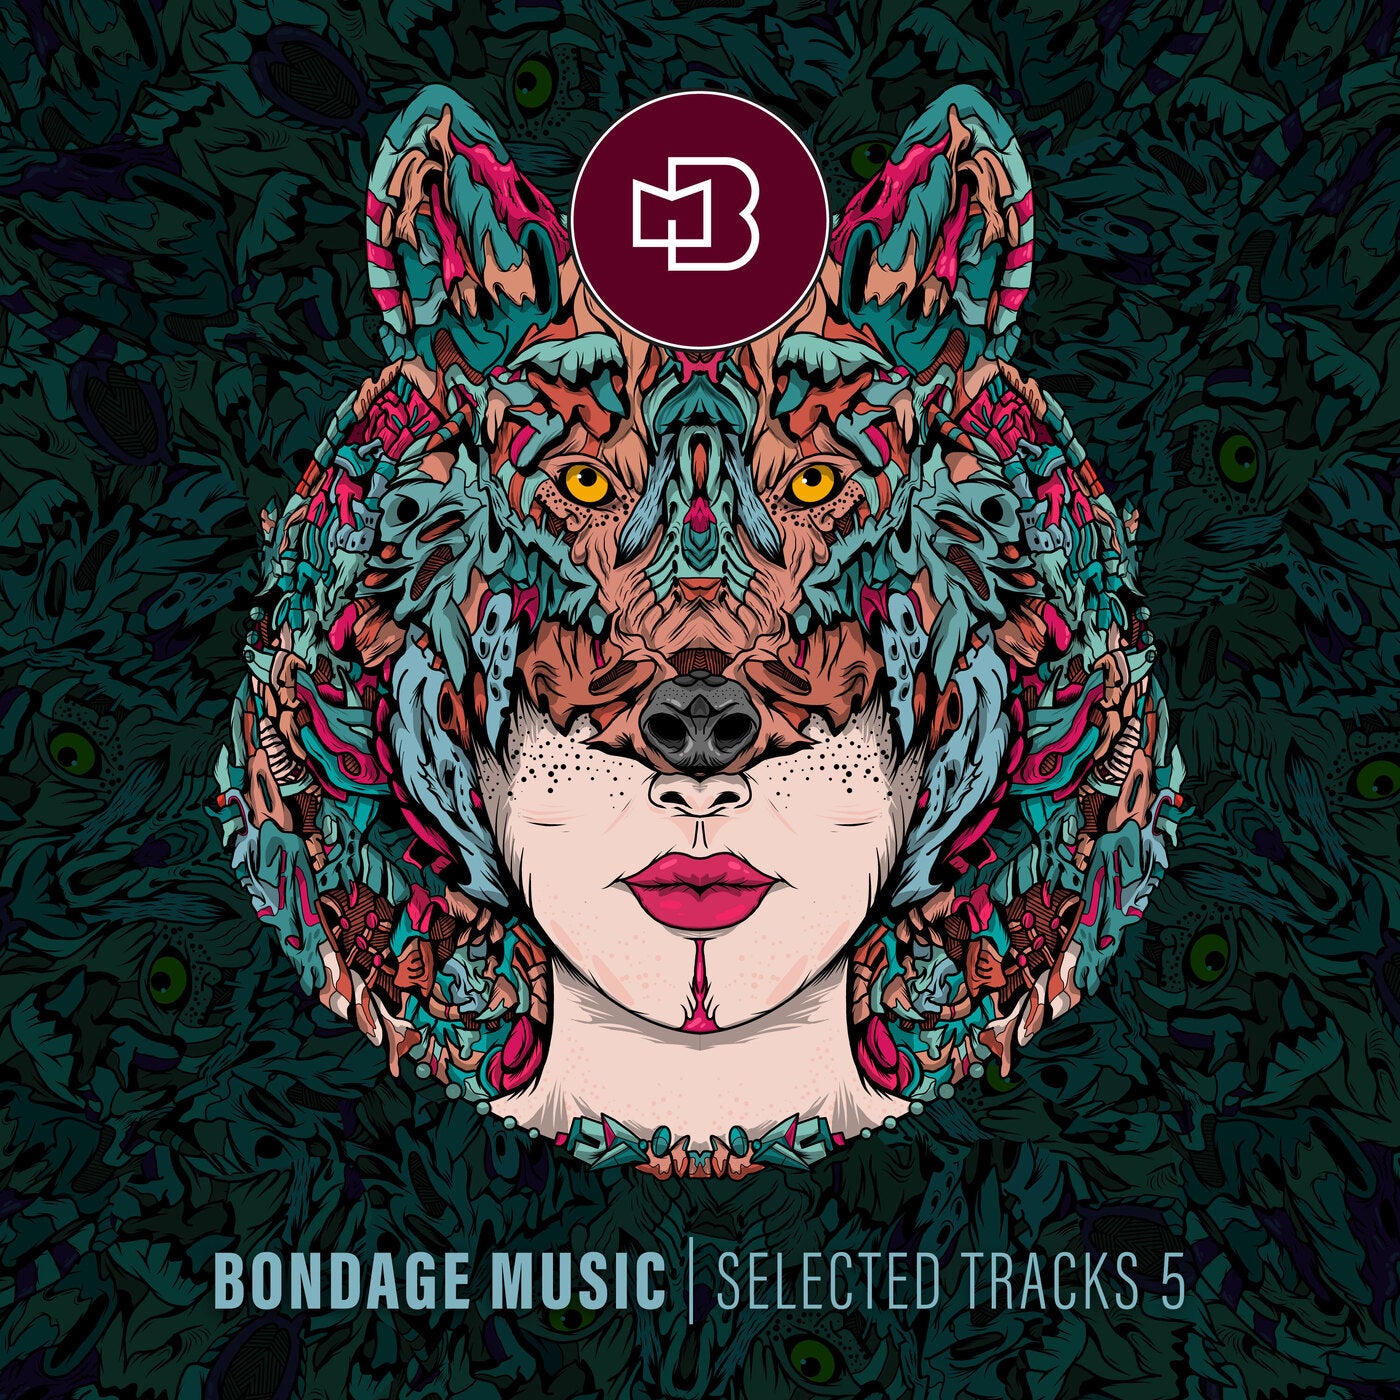 image cover: VA - Selected Tracks 5 on Bondage Music